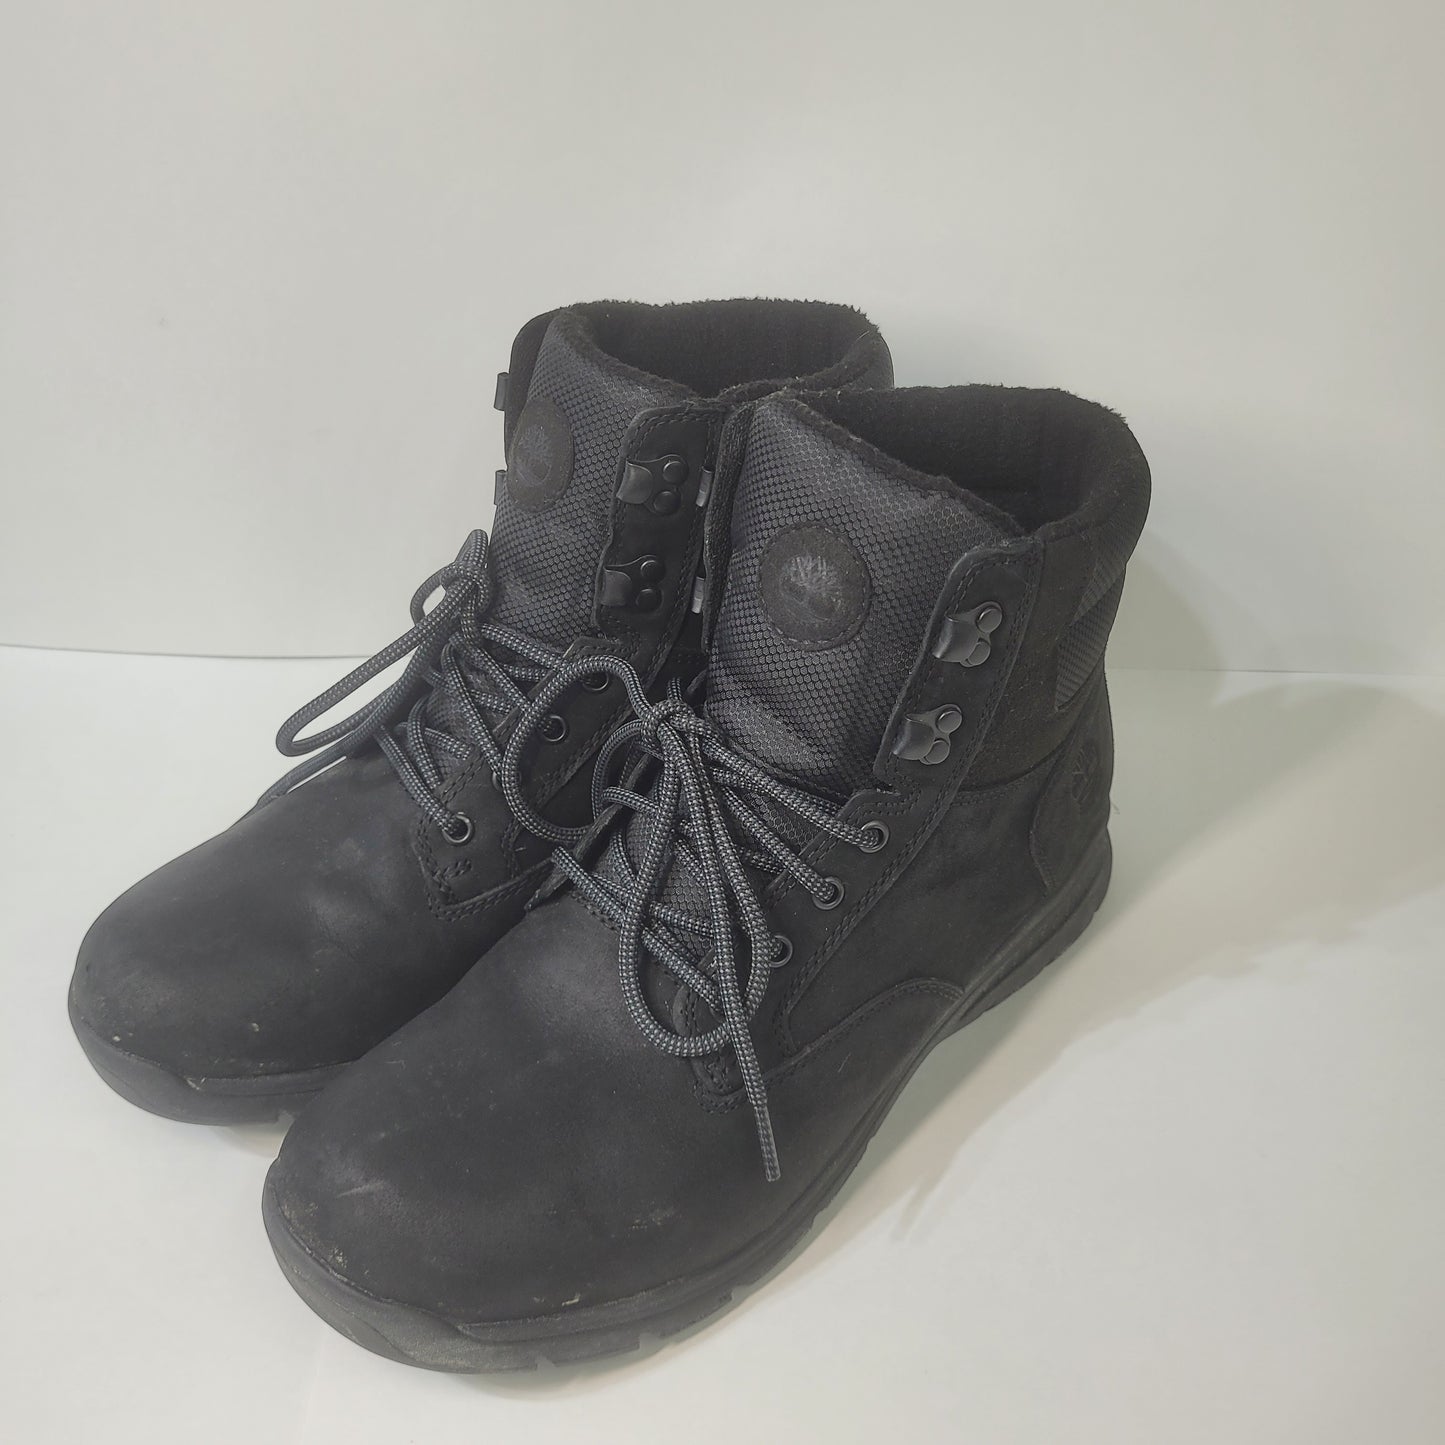 Timberland Waterproof Men's Work Boots Black - Size 11